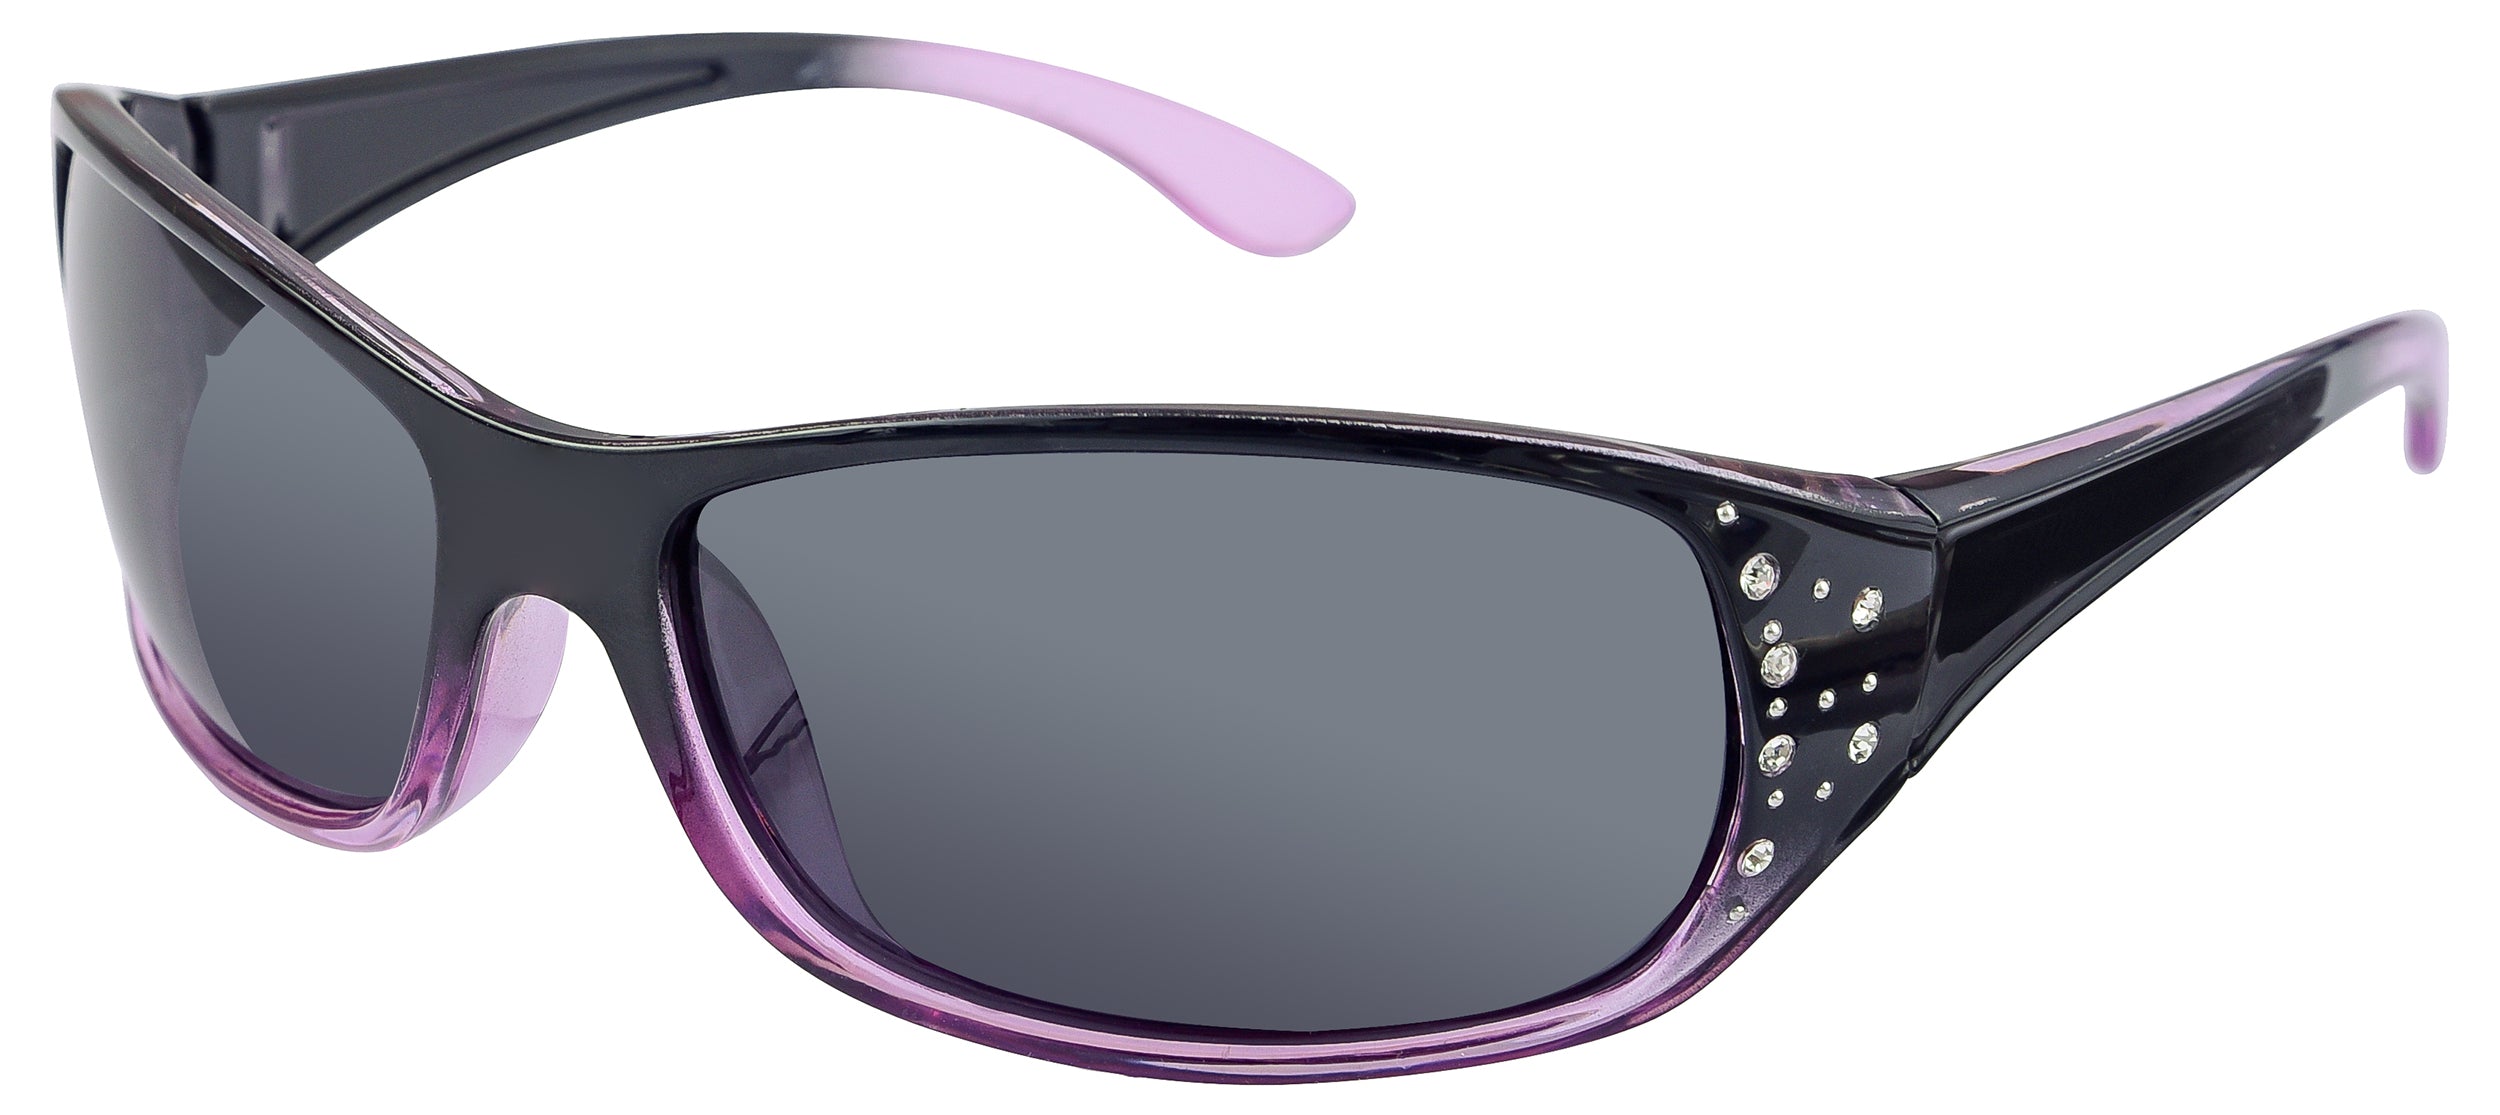 Polarized Sunglasses For Women Midnight Black Frame Dark Smoke Lens Hz Series Elettra 